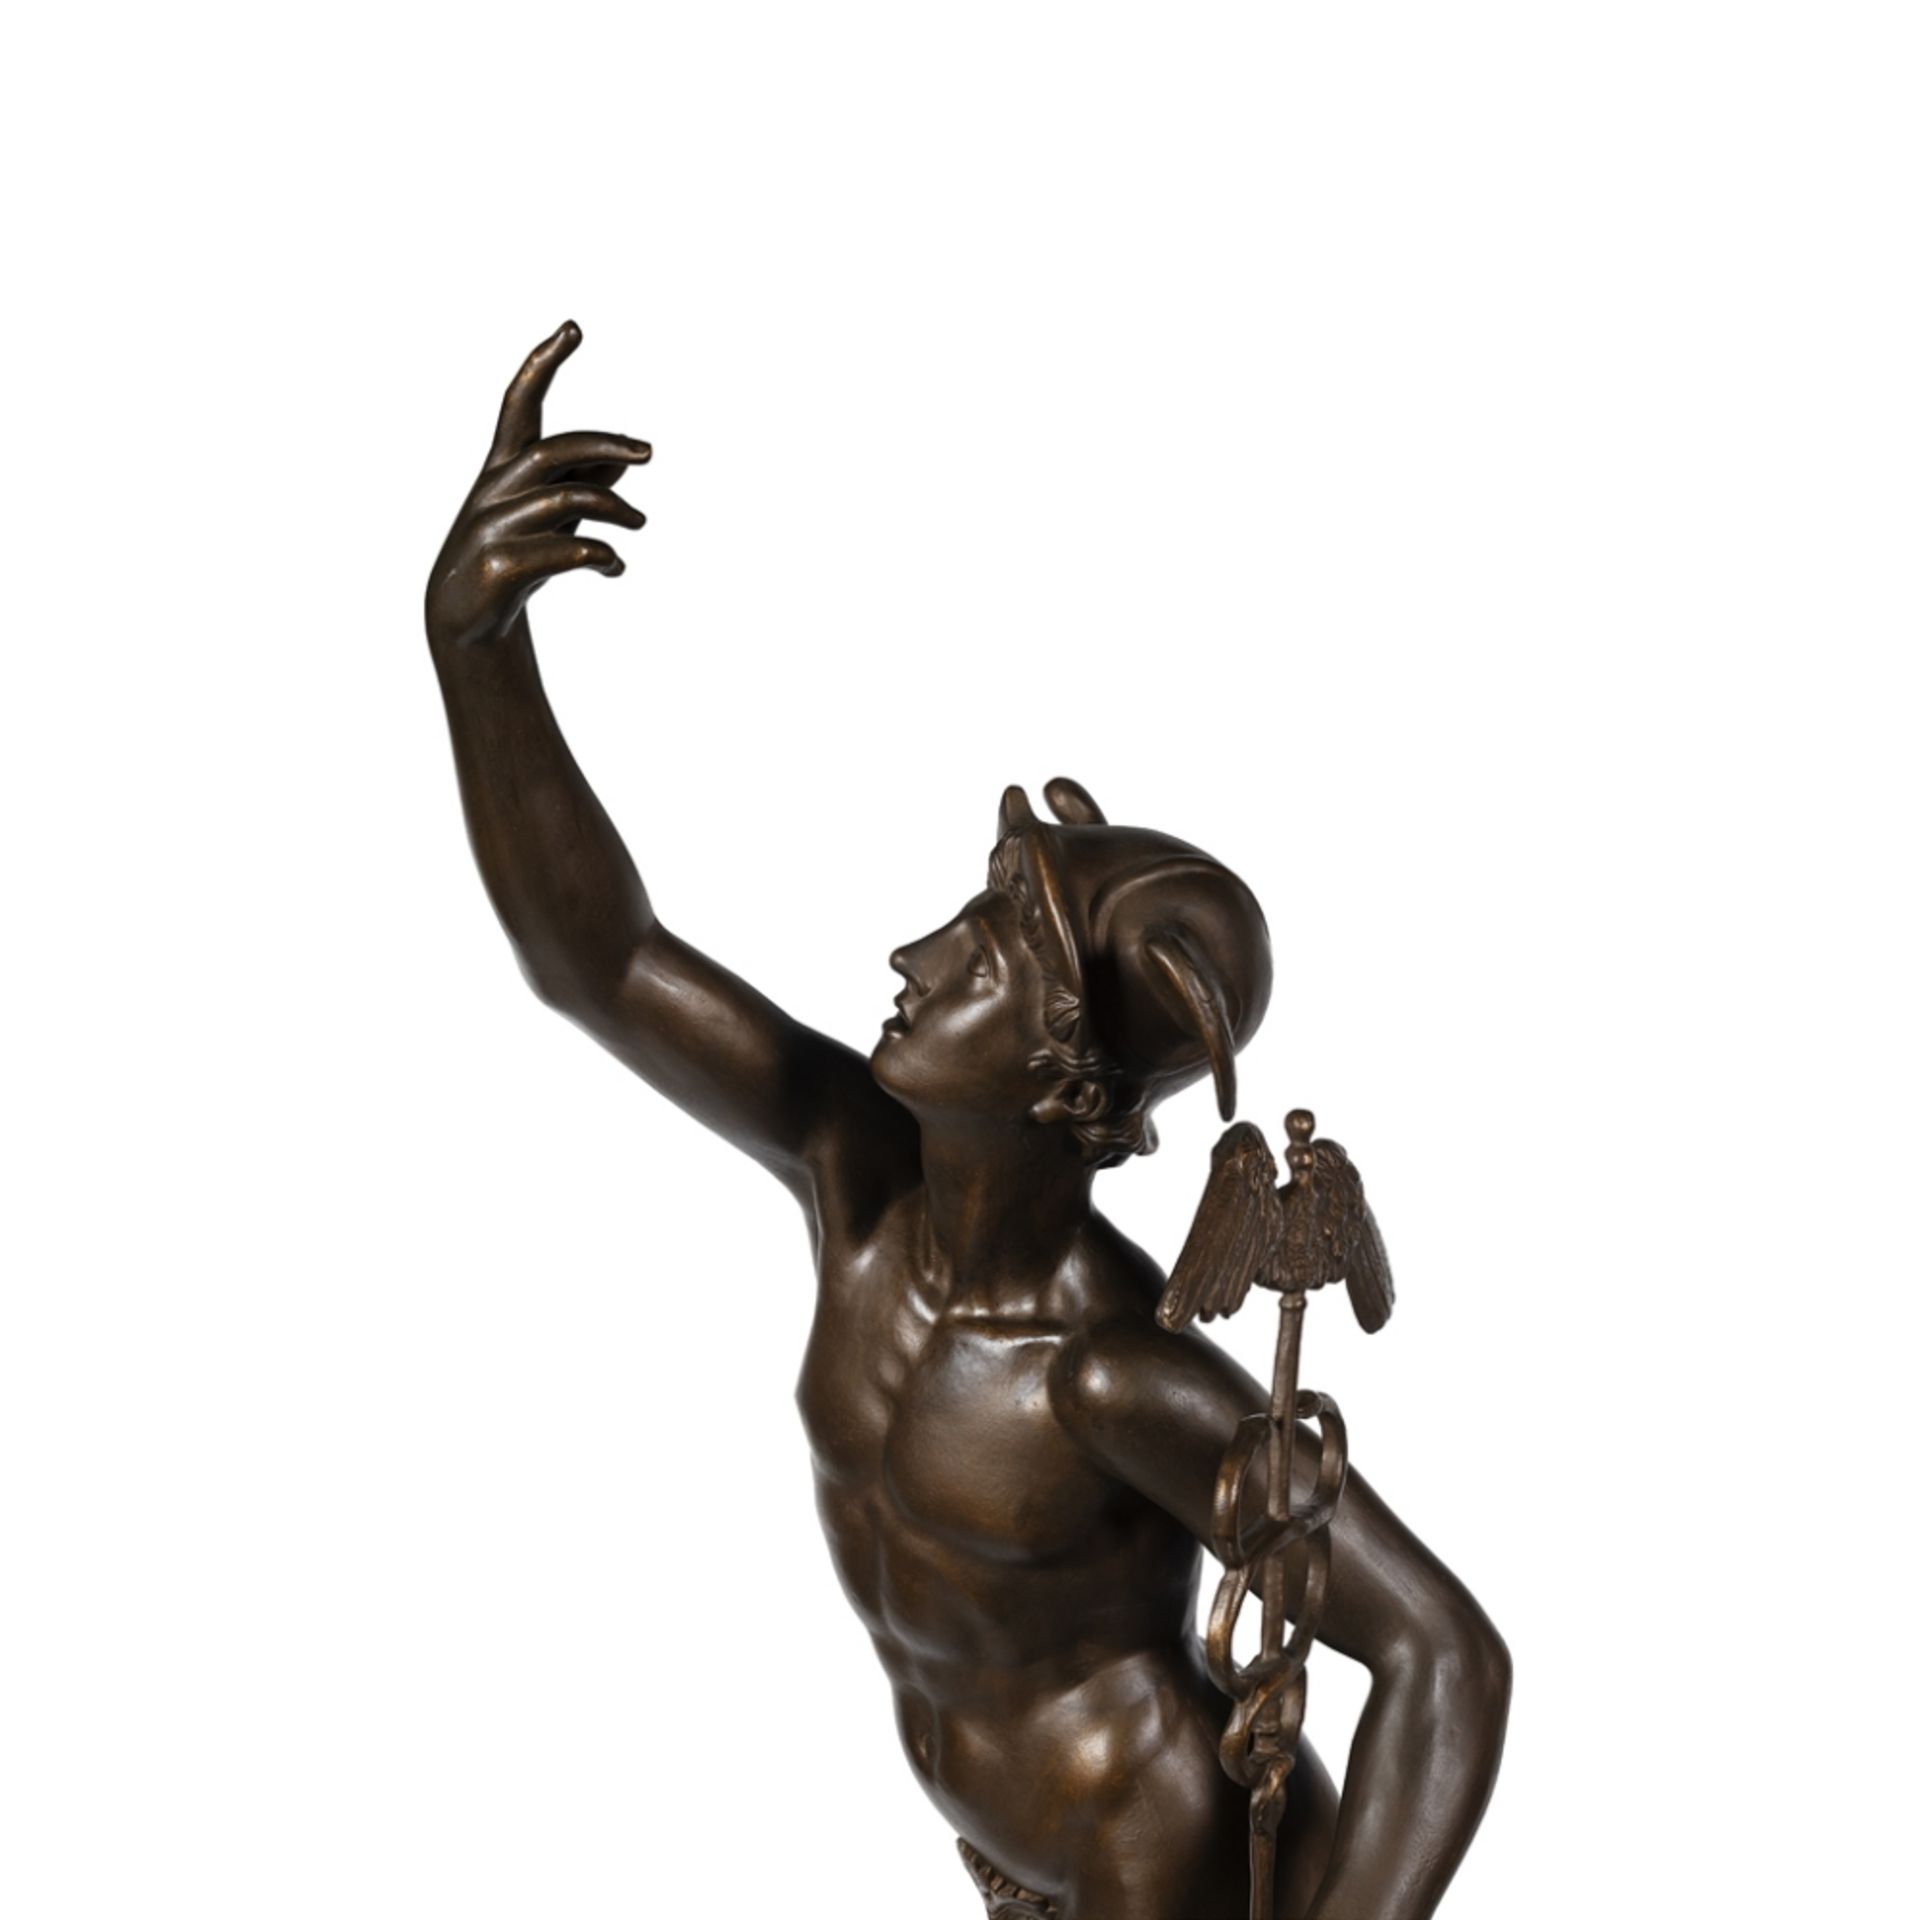 AFTER GIAMBOLOGNAMERCURY large patinated iron figure194cm high - Image 3 of 4